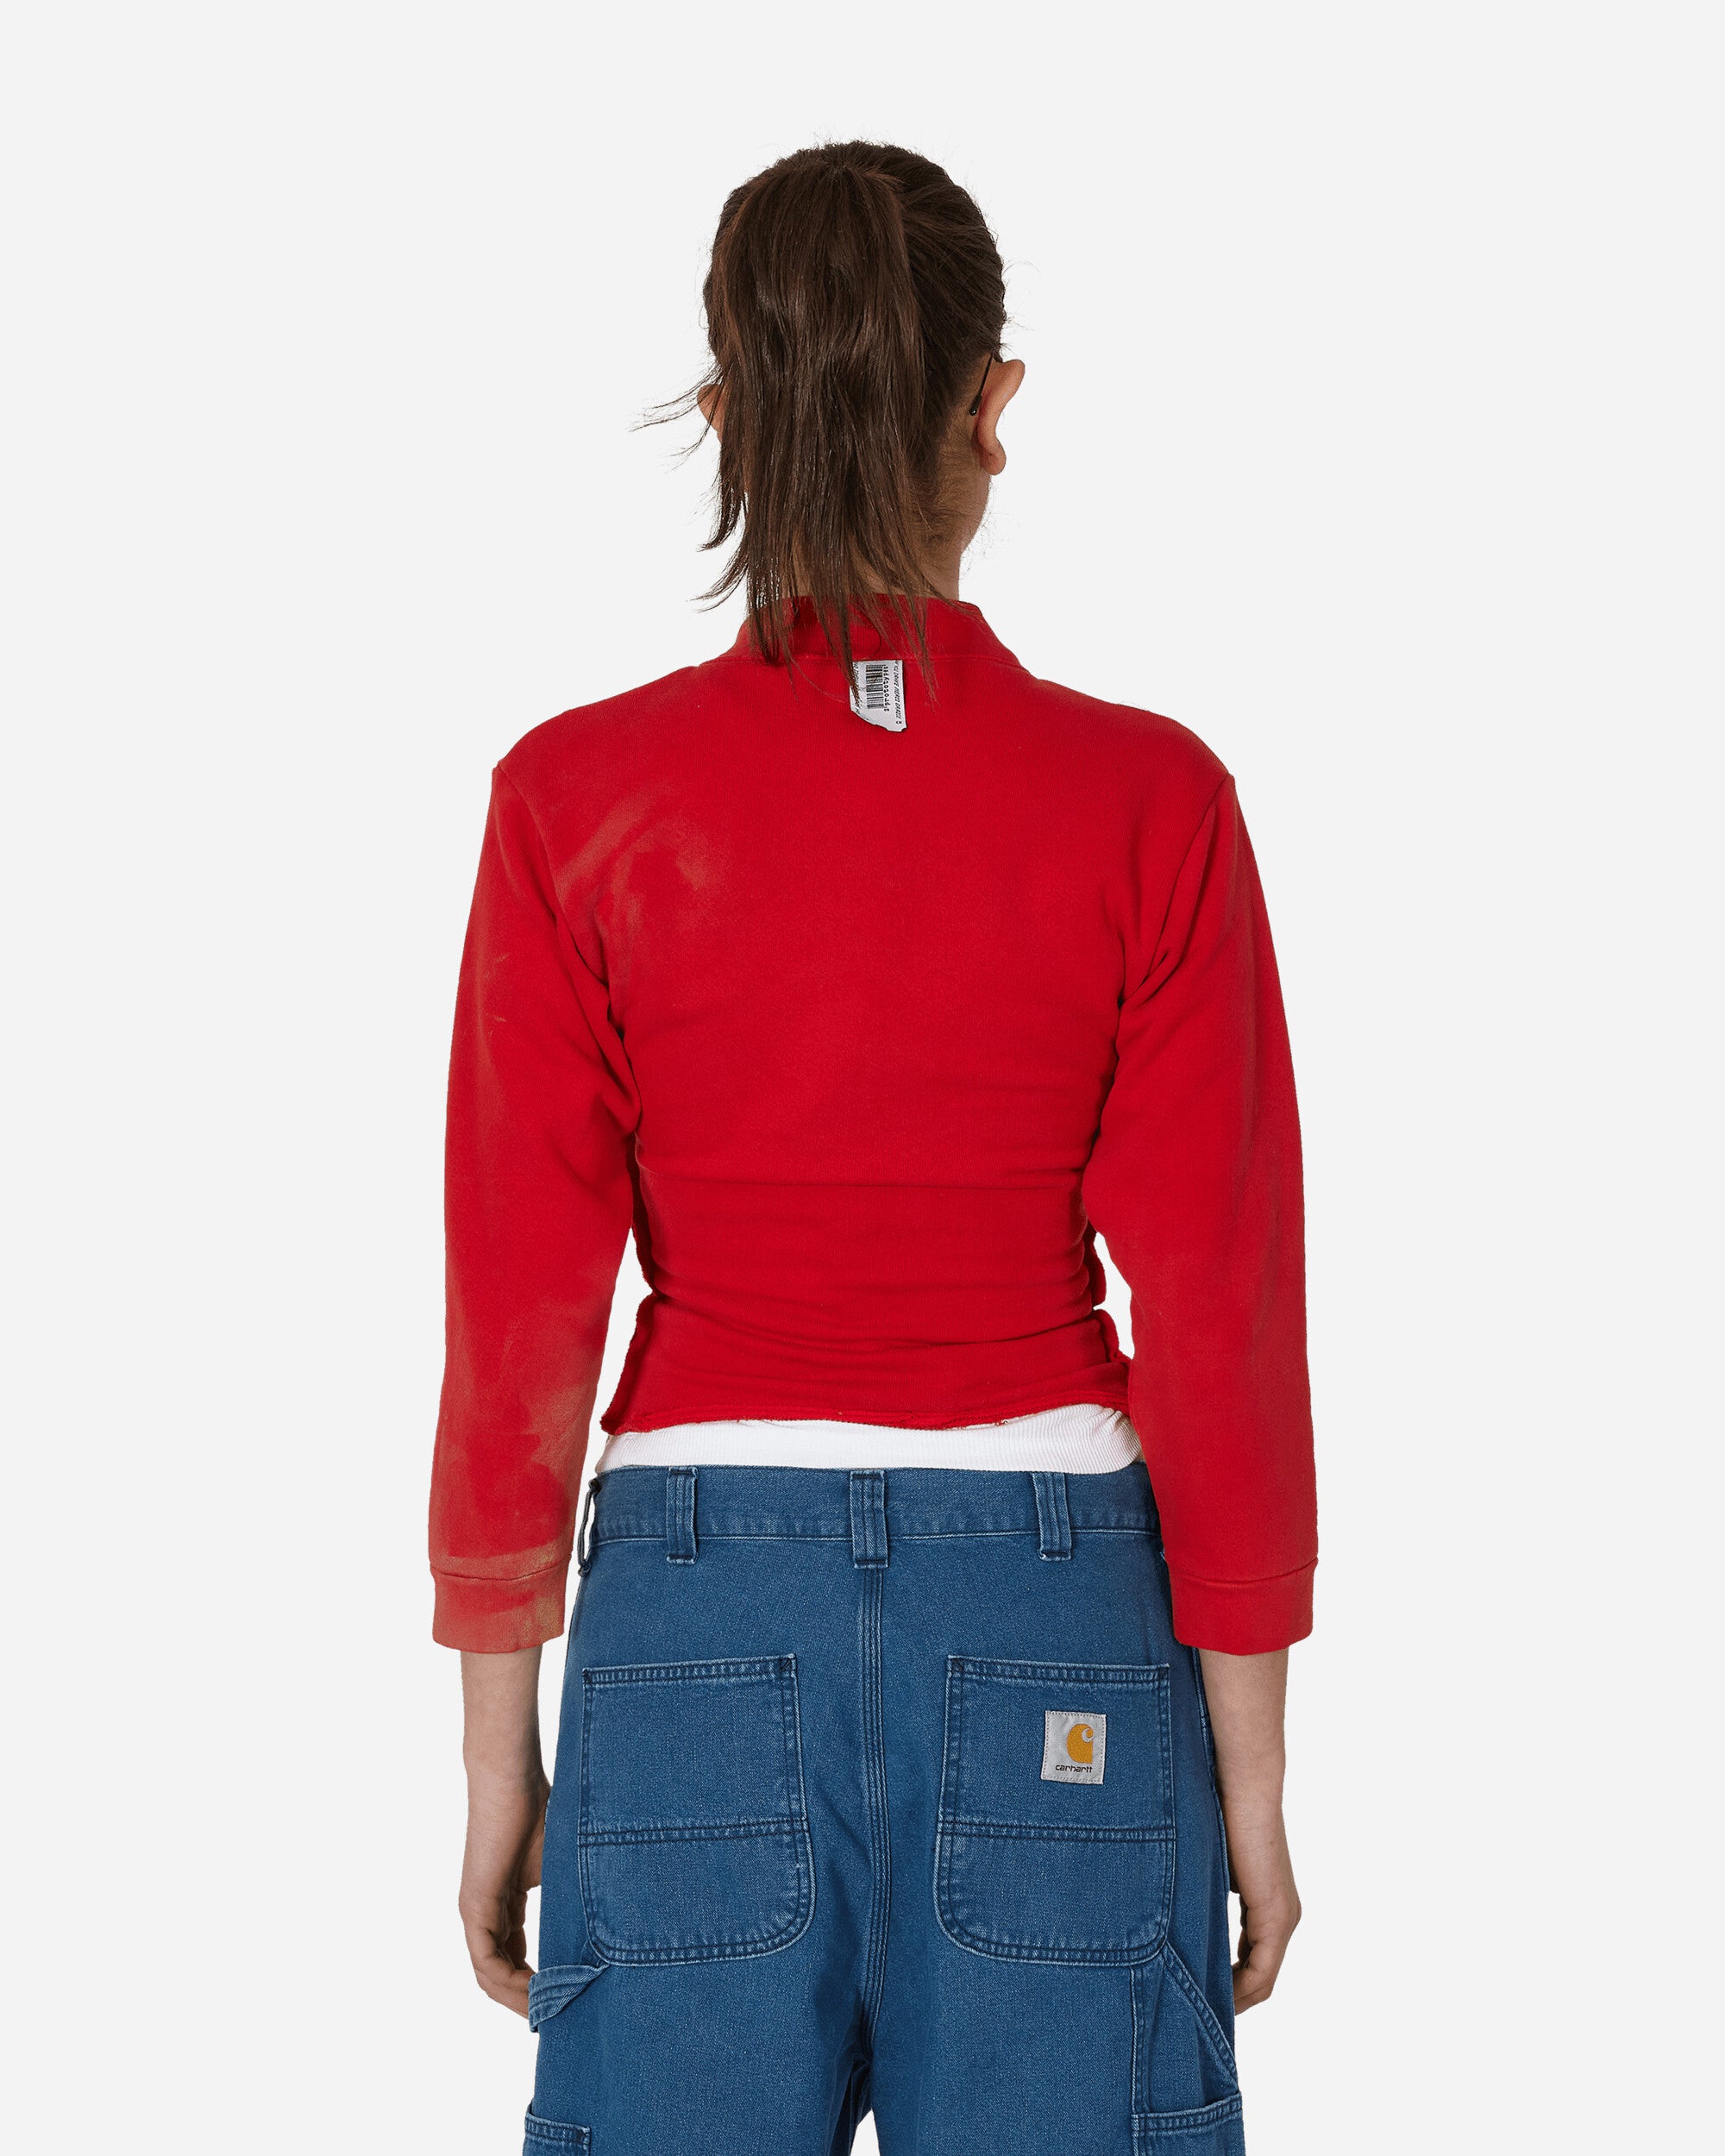 Prototypes Wmns Upside Down Zip Up Red/Print Sweatshirts Track Tops PT05JTO47WWW REDPRINT